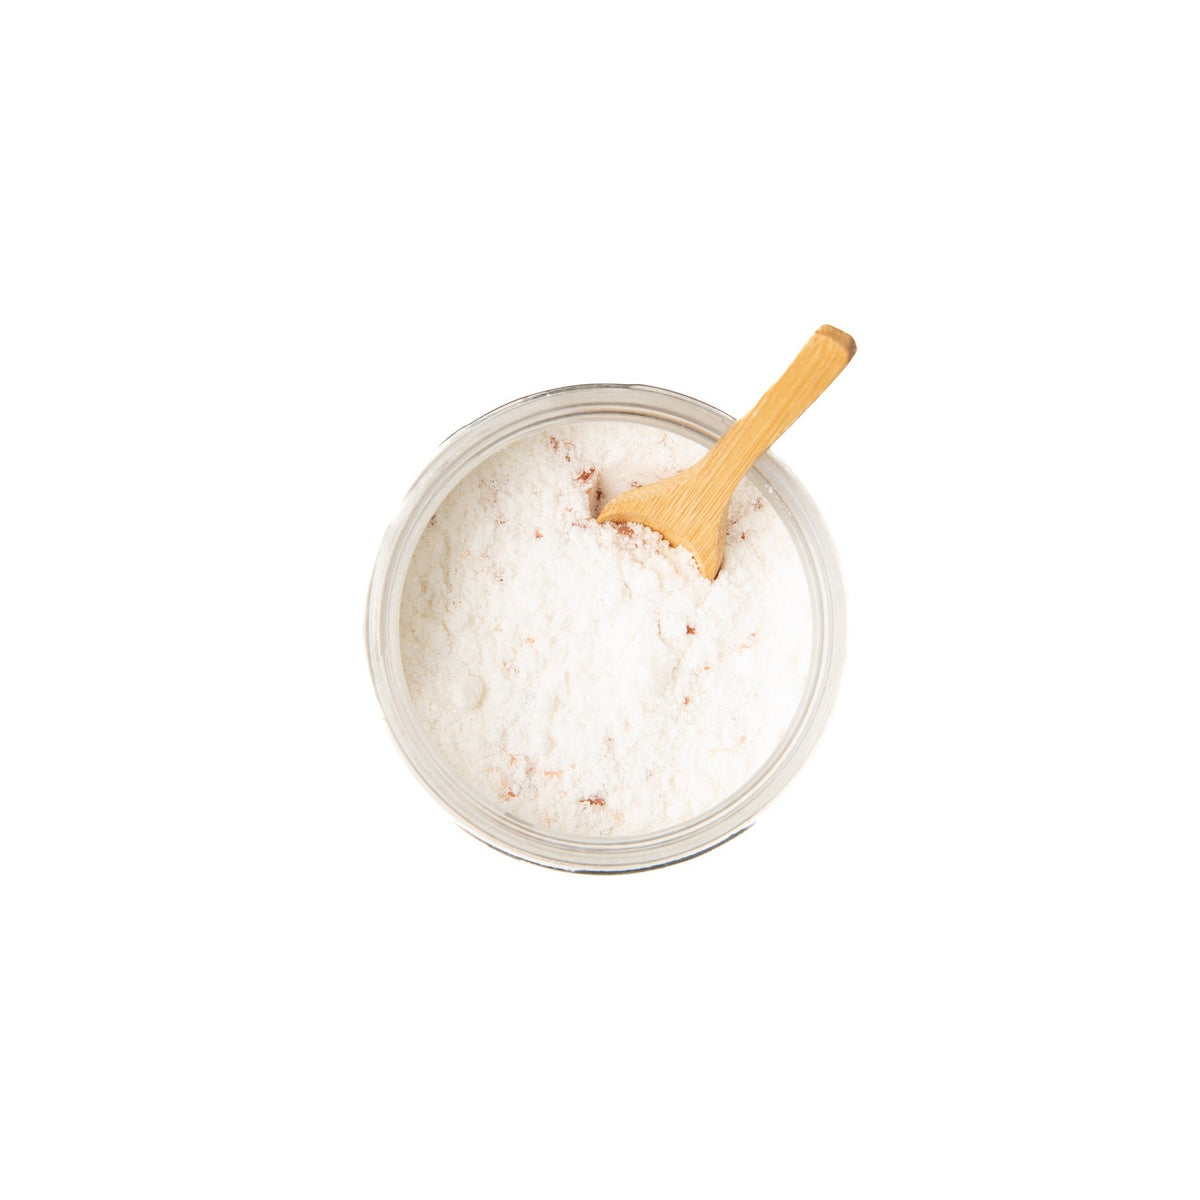 * Paavani Ayurveda - Organic Coconut Milk Bath with Coconut Milk, Epsom Salt and Turmeric 16 oz.-1